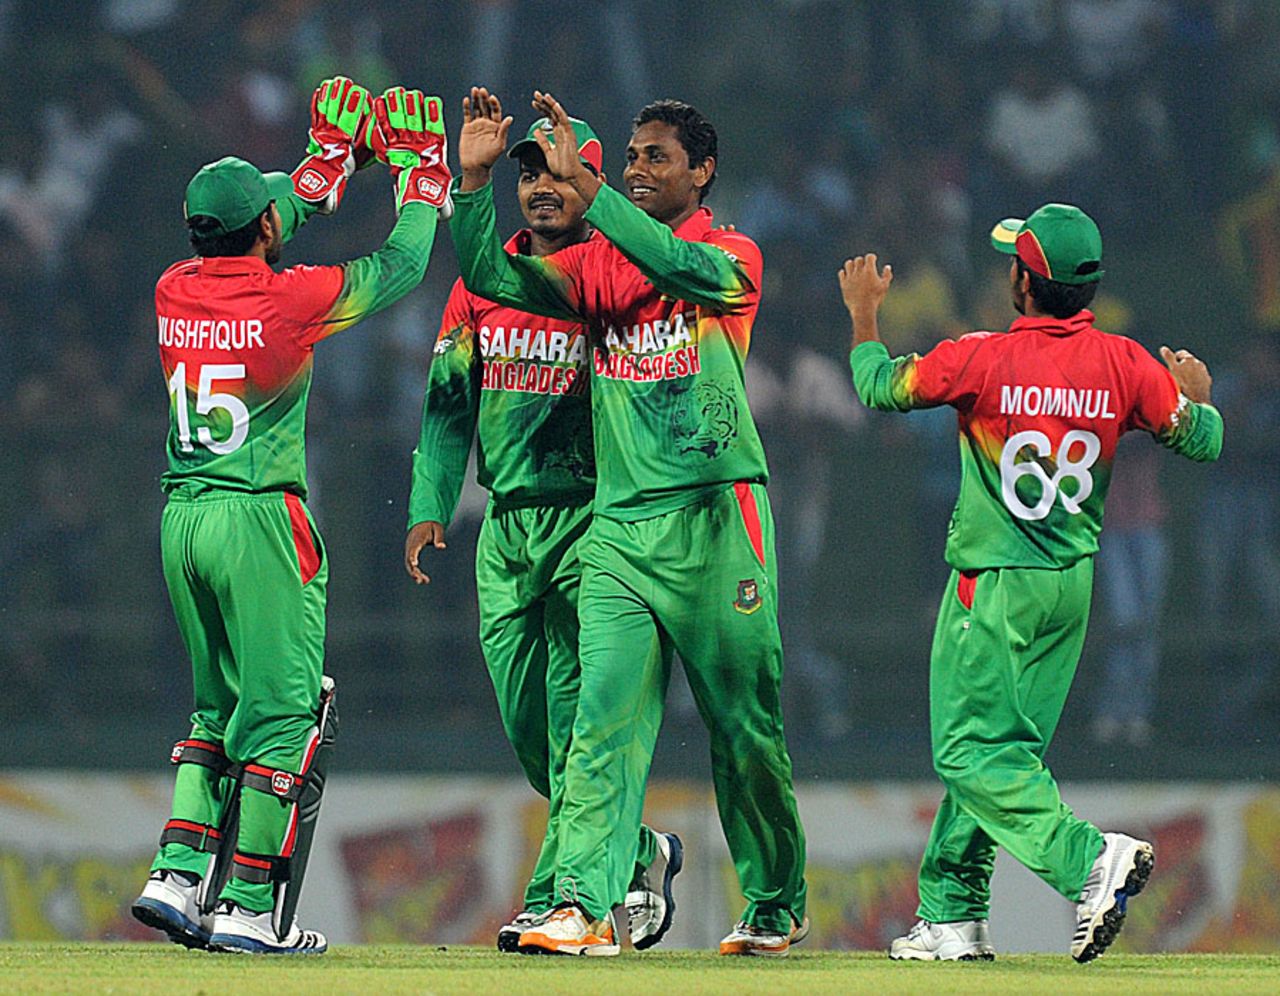 Sohag Gazi took the early wicket of Dilshan Munaweera, Sri Lanka v Bangladesh, only Twenty20, Pallekele, March 31, 2013